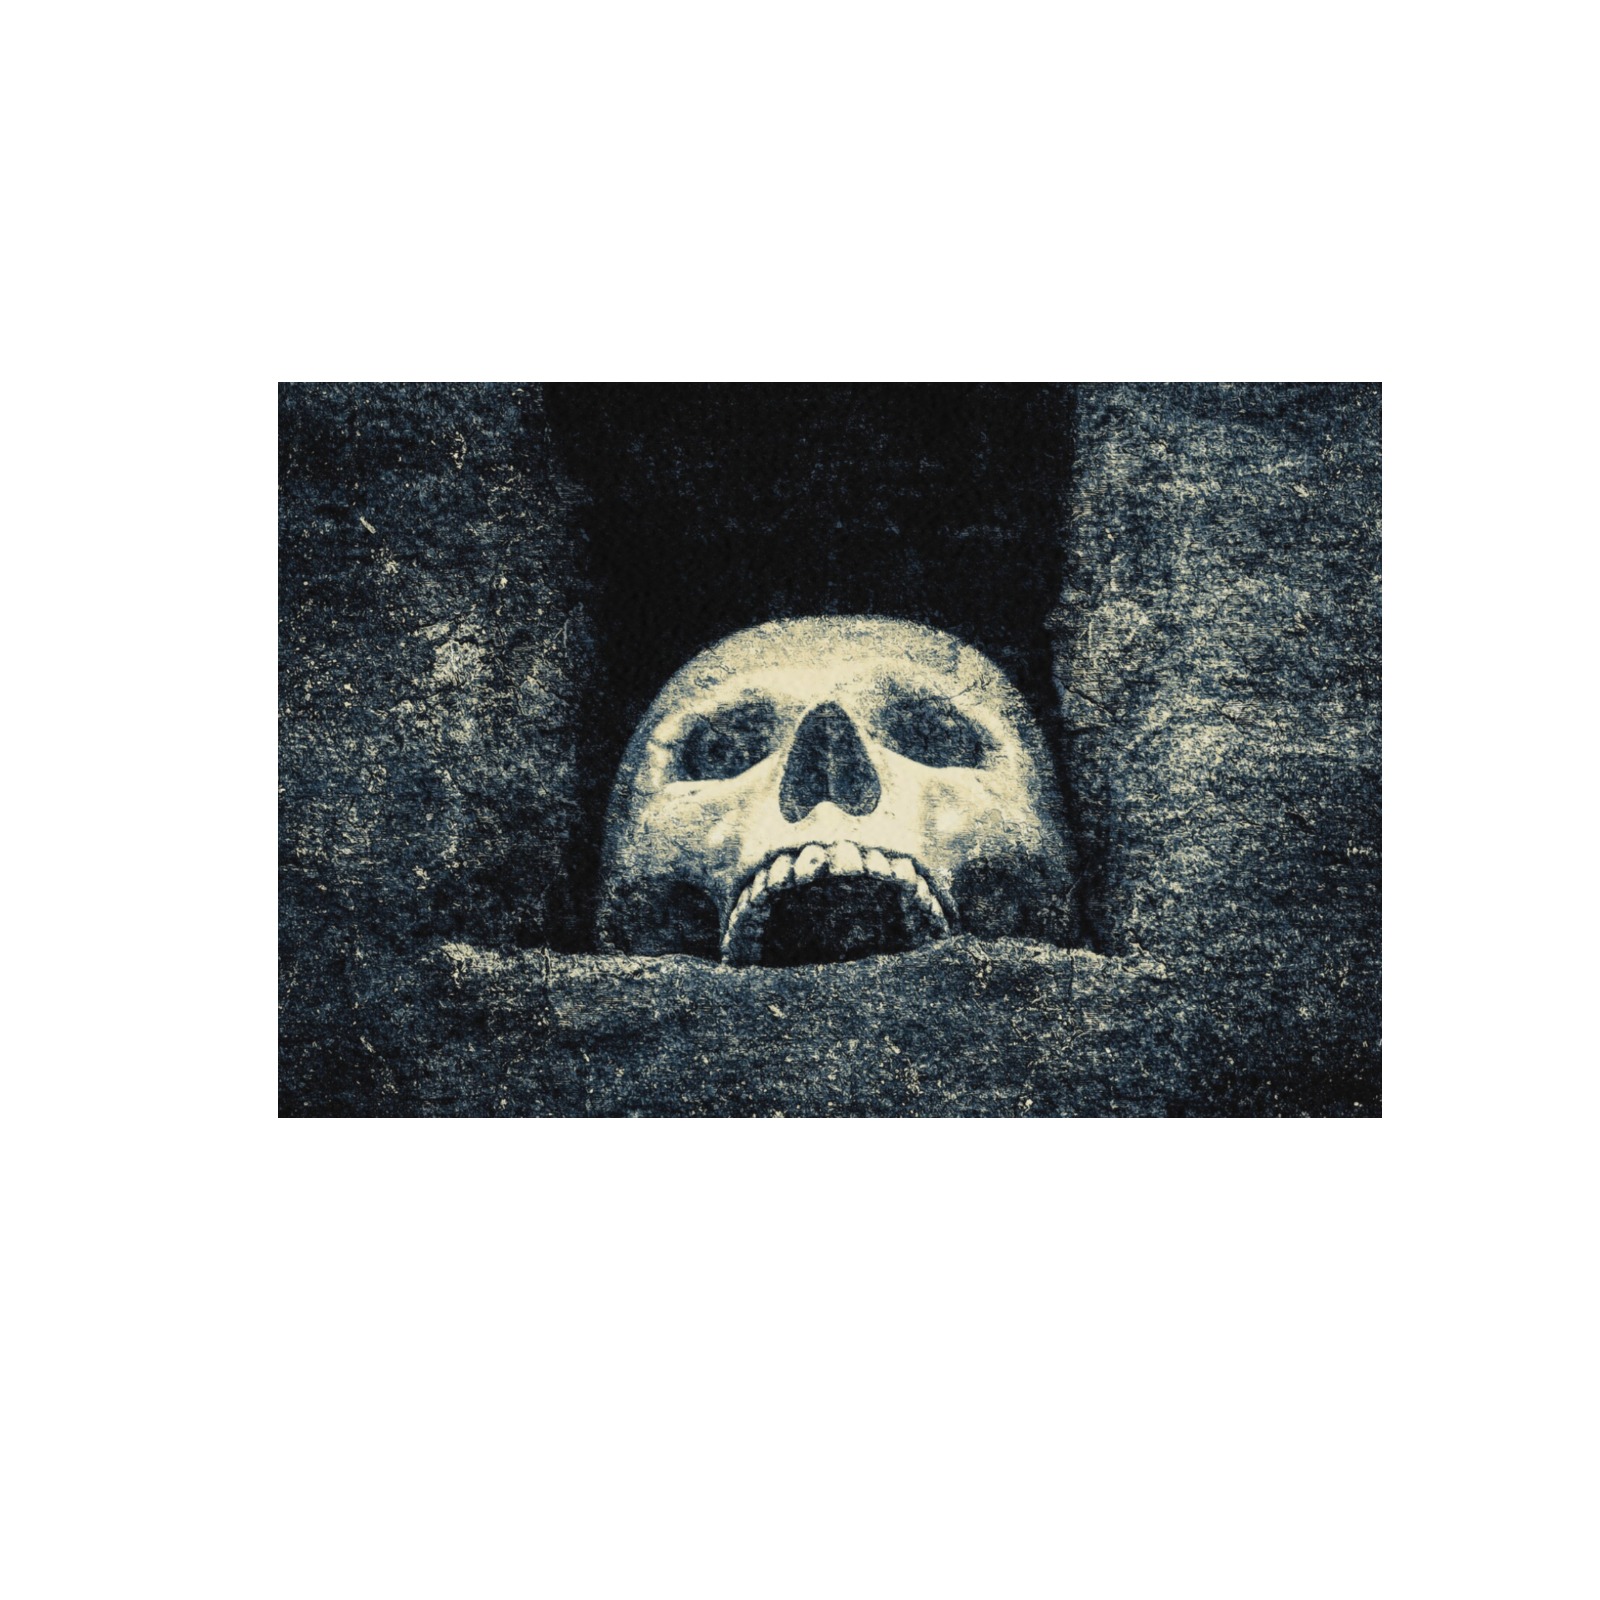 White Human Skull In A Pagan Shrine Halloween Cool Frame Canvas Print 48"x32"